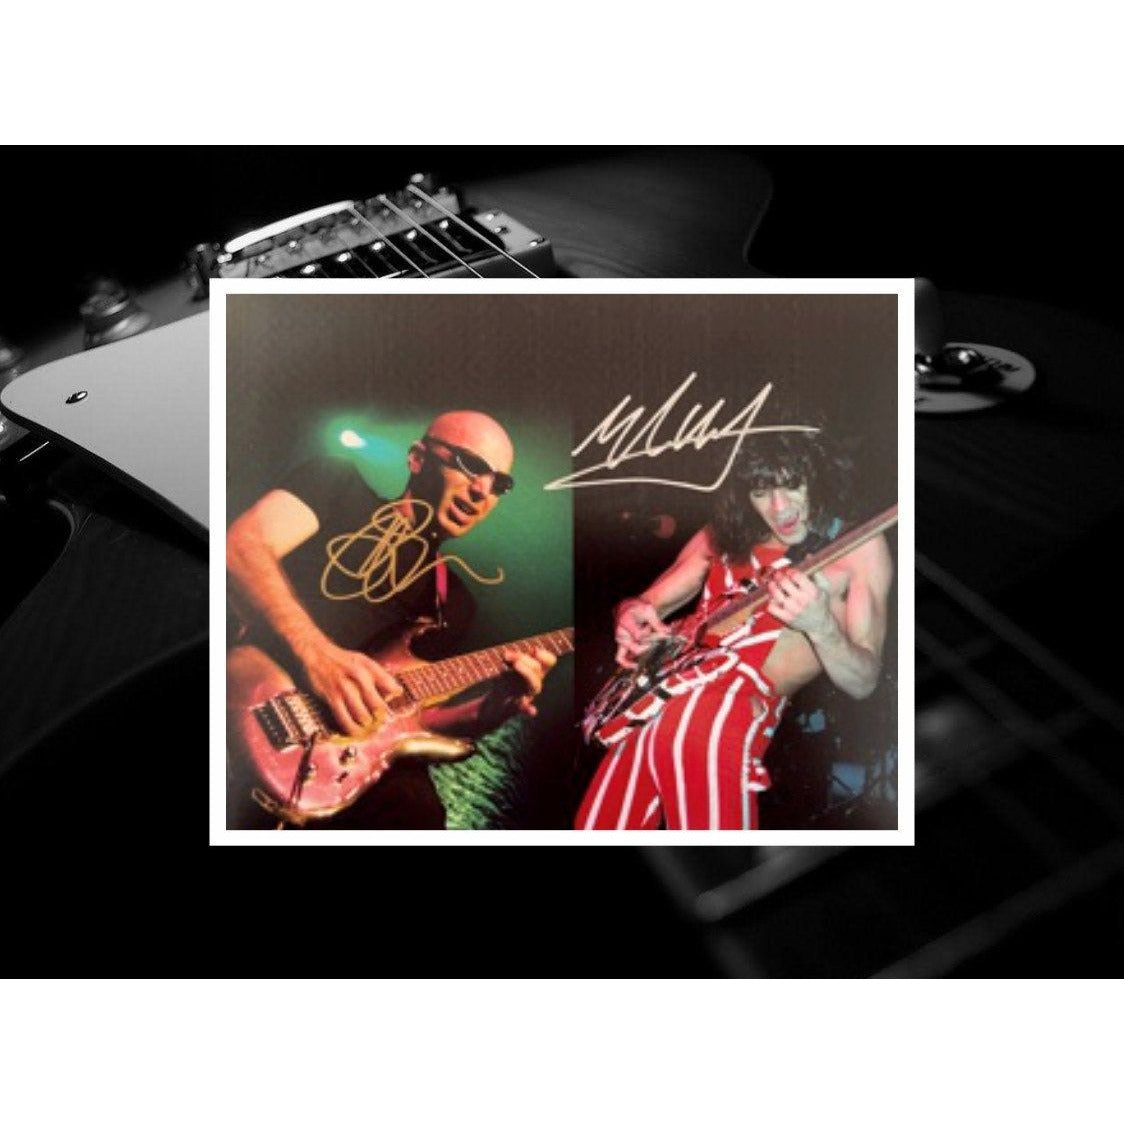 Eddie Van Halen and Joe Satriani 8 x 10 signed photo with proof